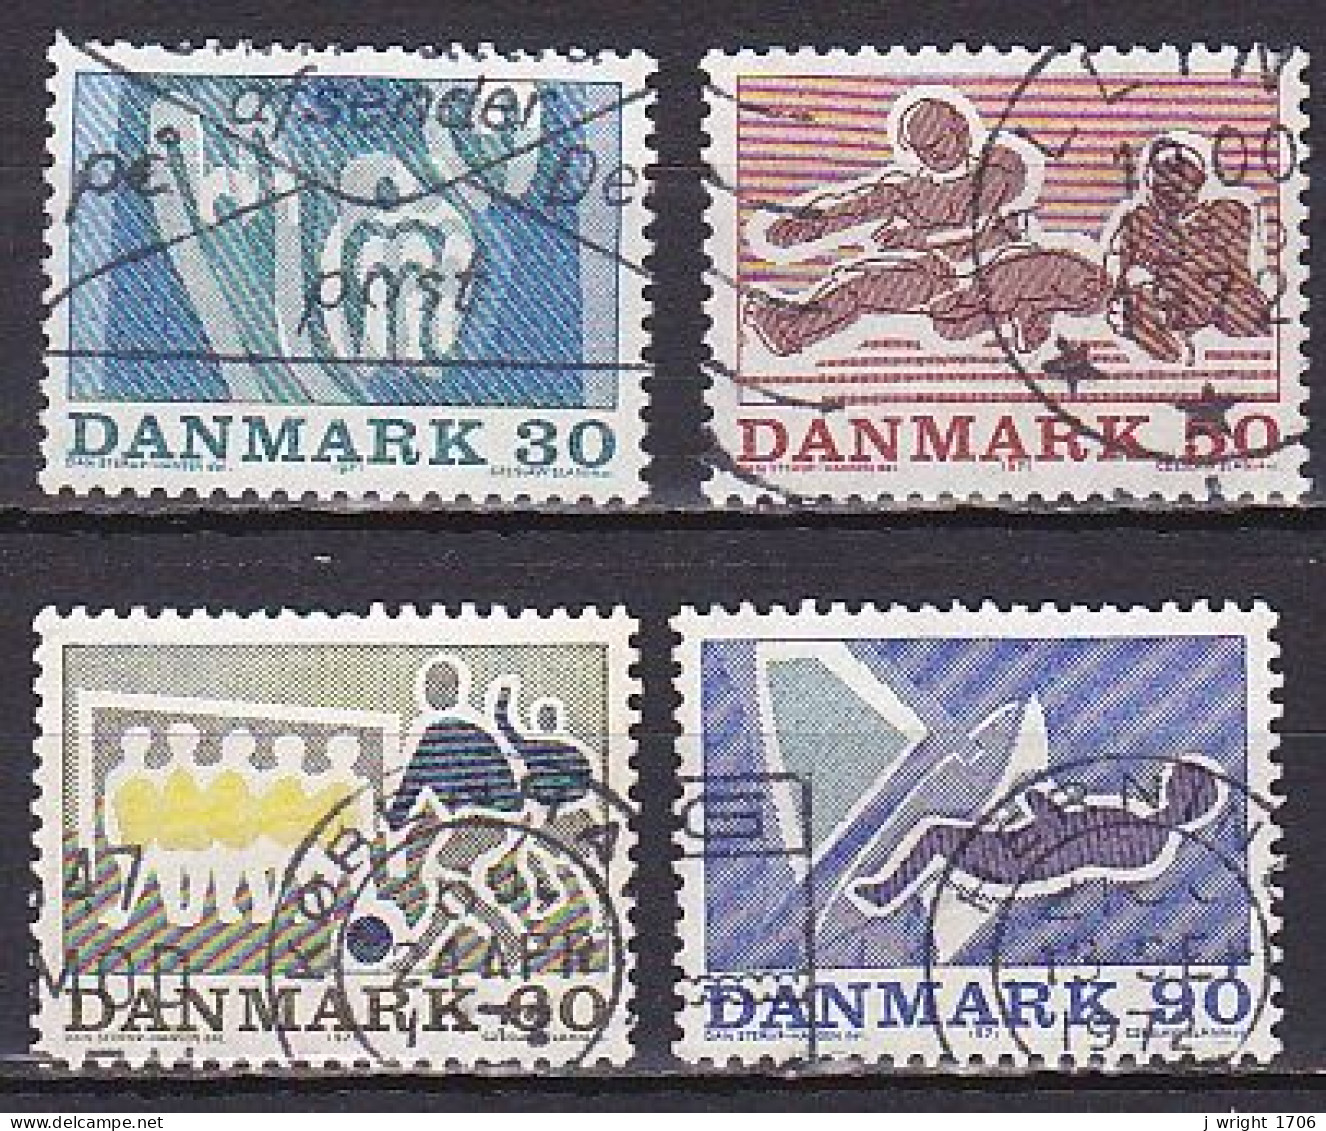 Denmark, 1971, Sports, Set, USED - Usati